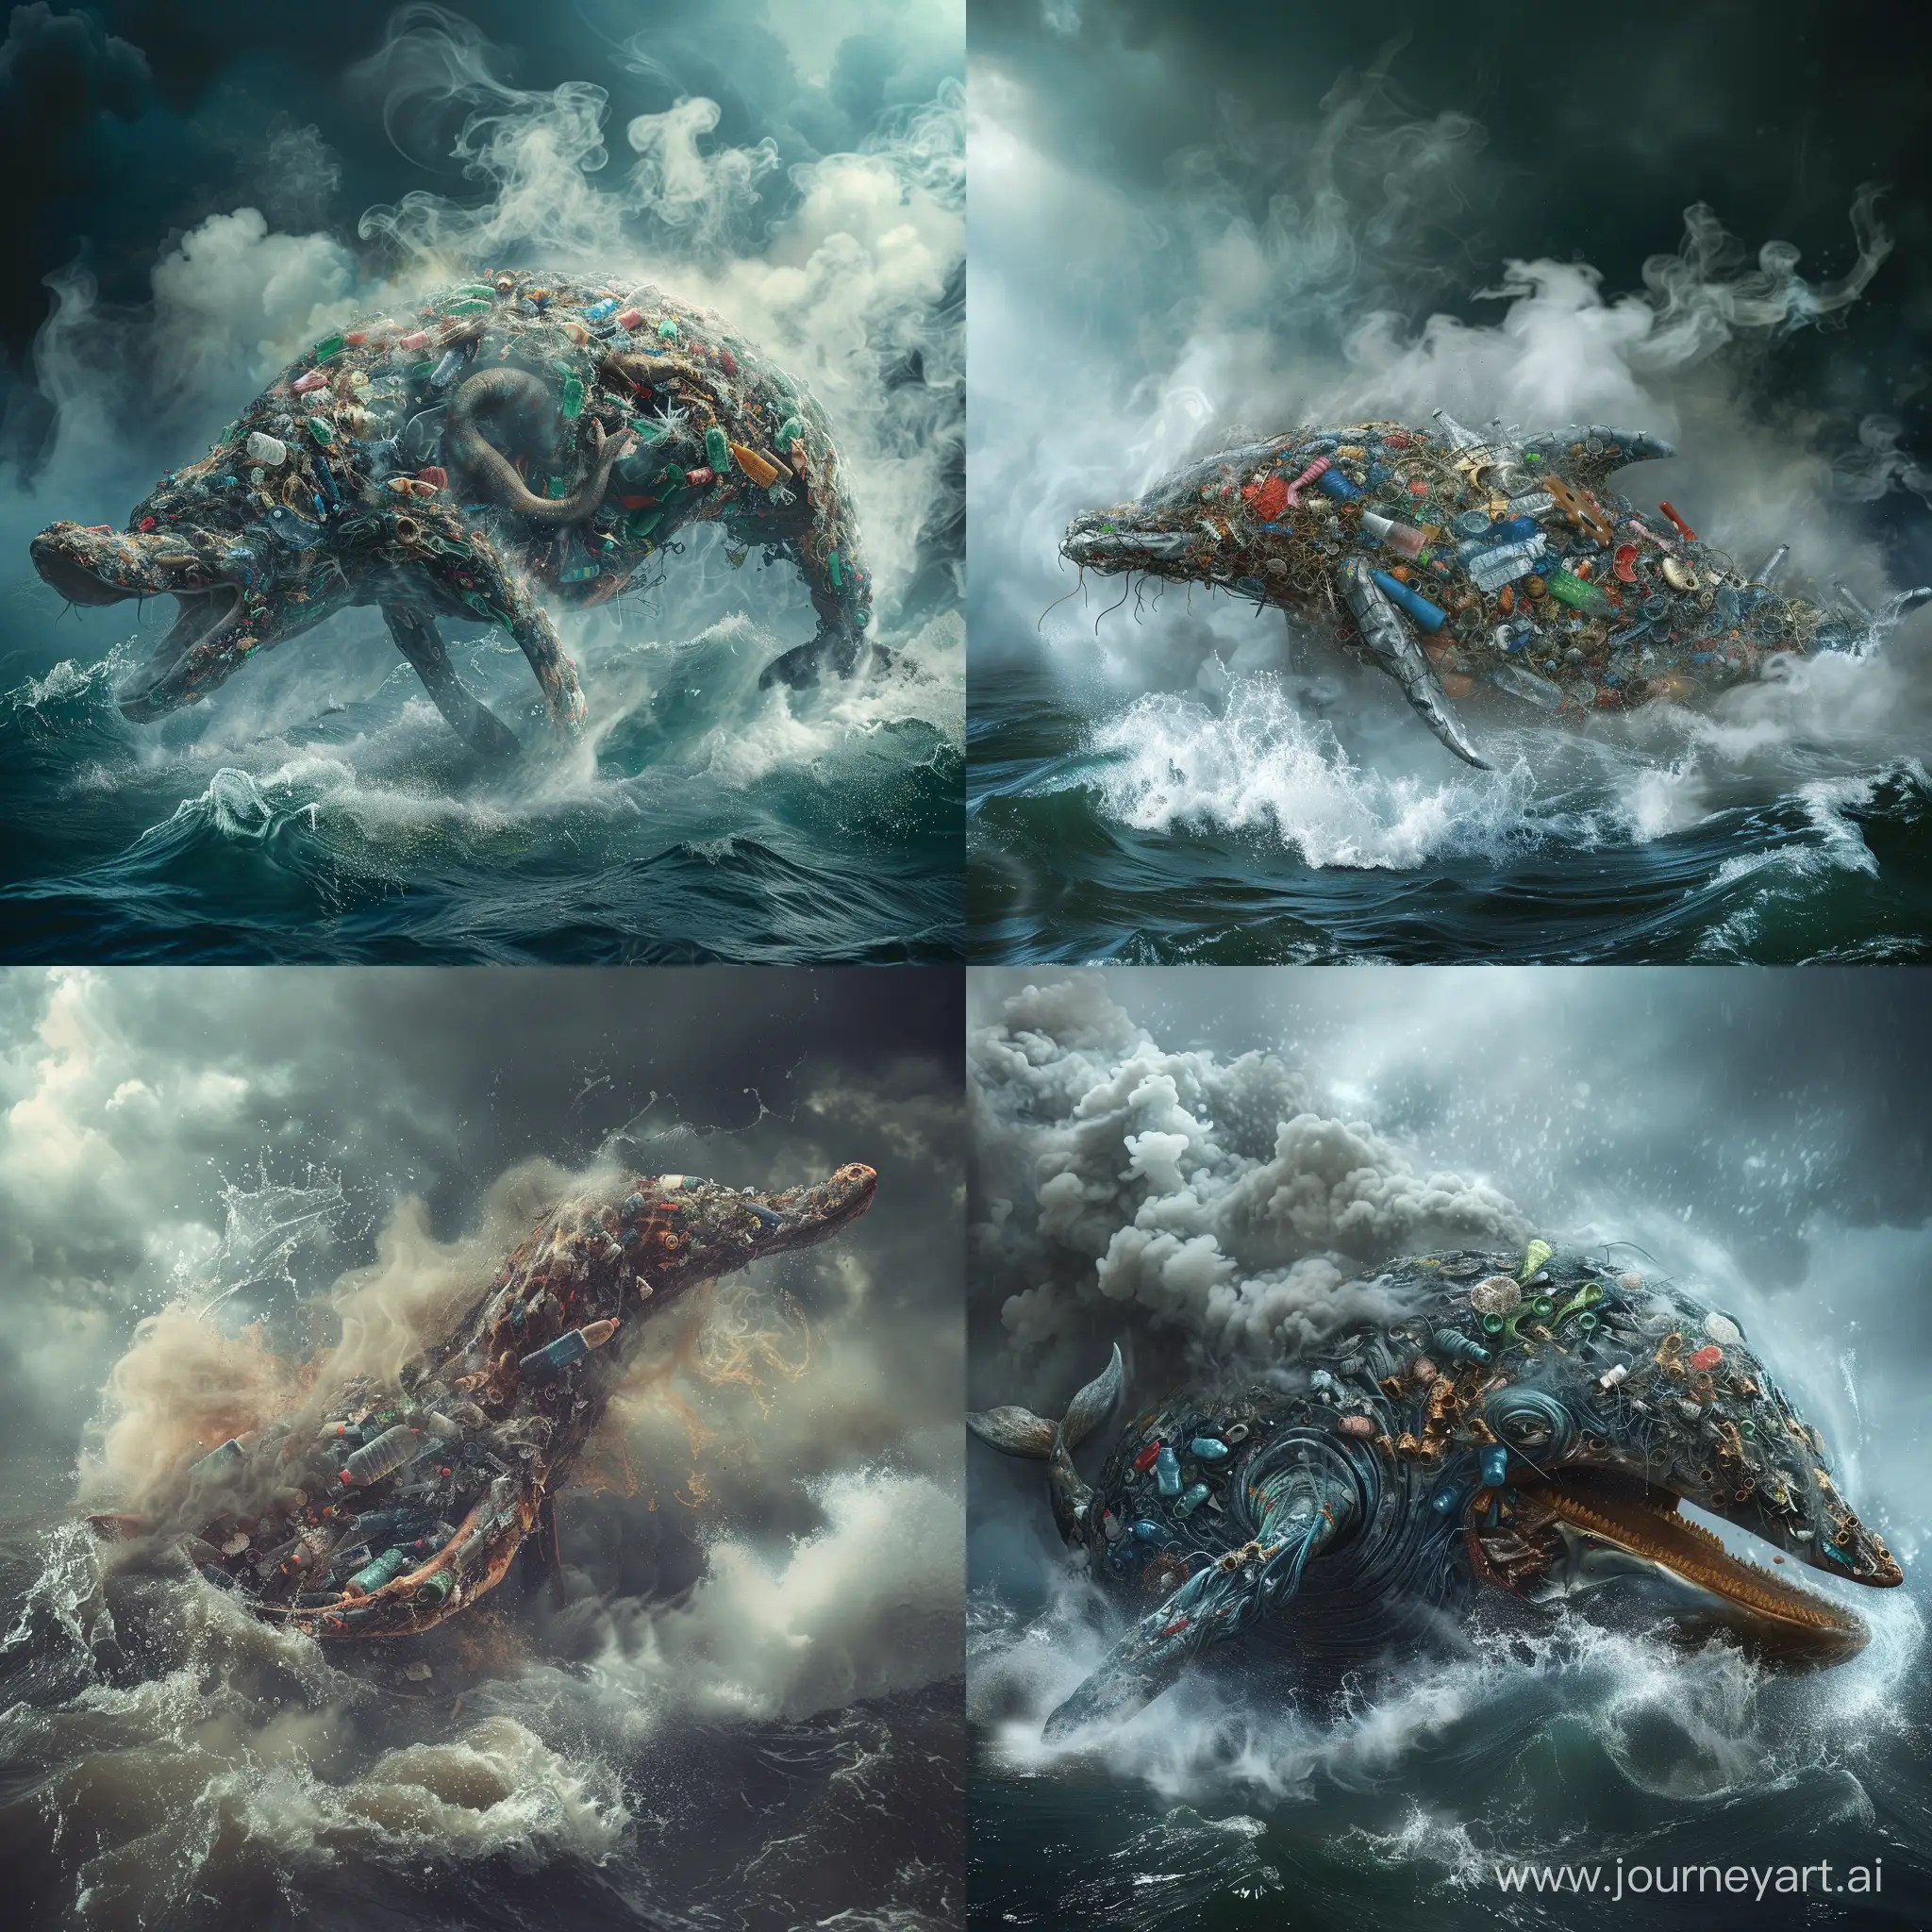 Surrealistic-Depiction-of-Aquatic-Animals-Amidst-Garbage-Pollution